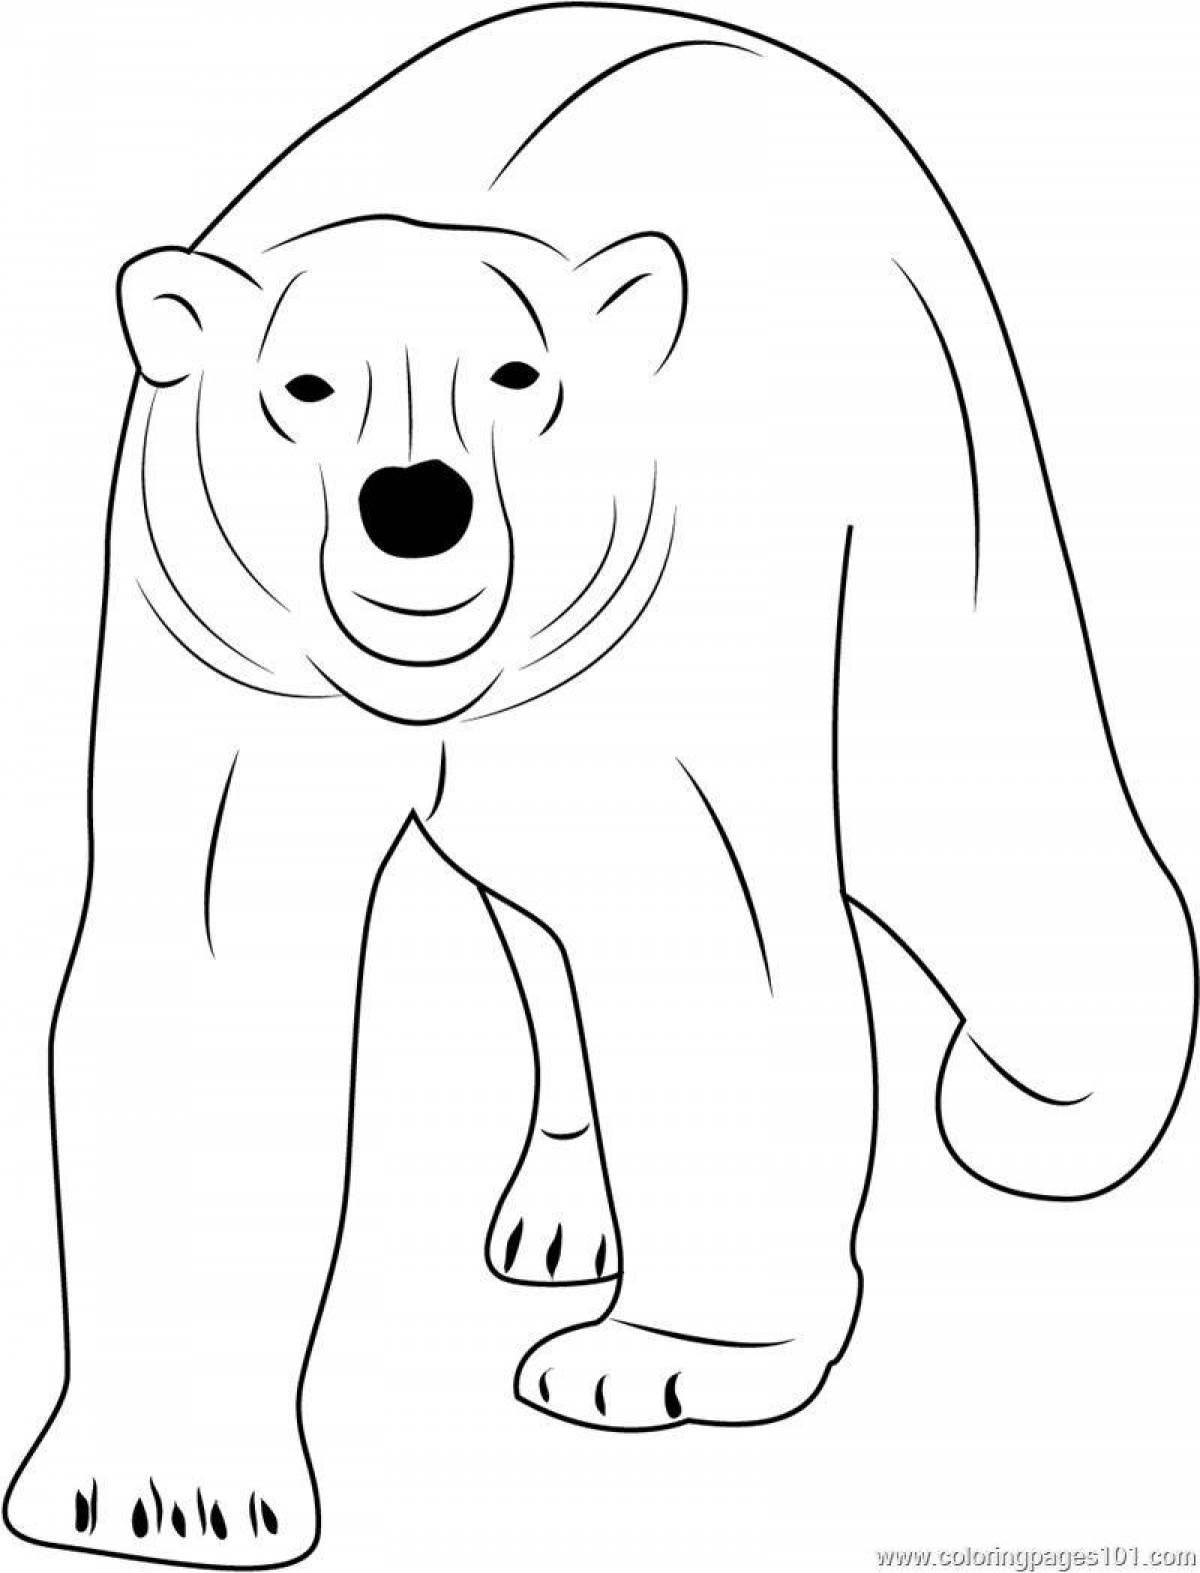 Colouring friendly polar bear